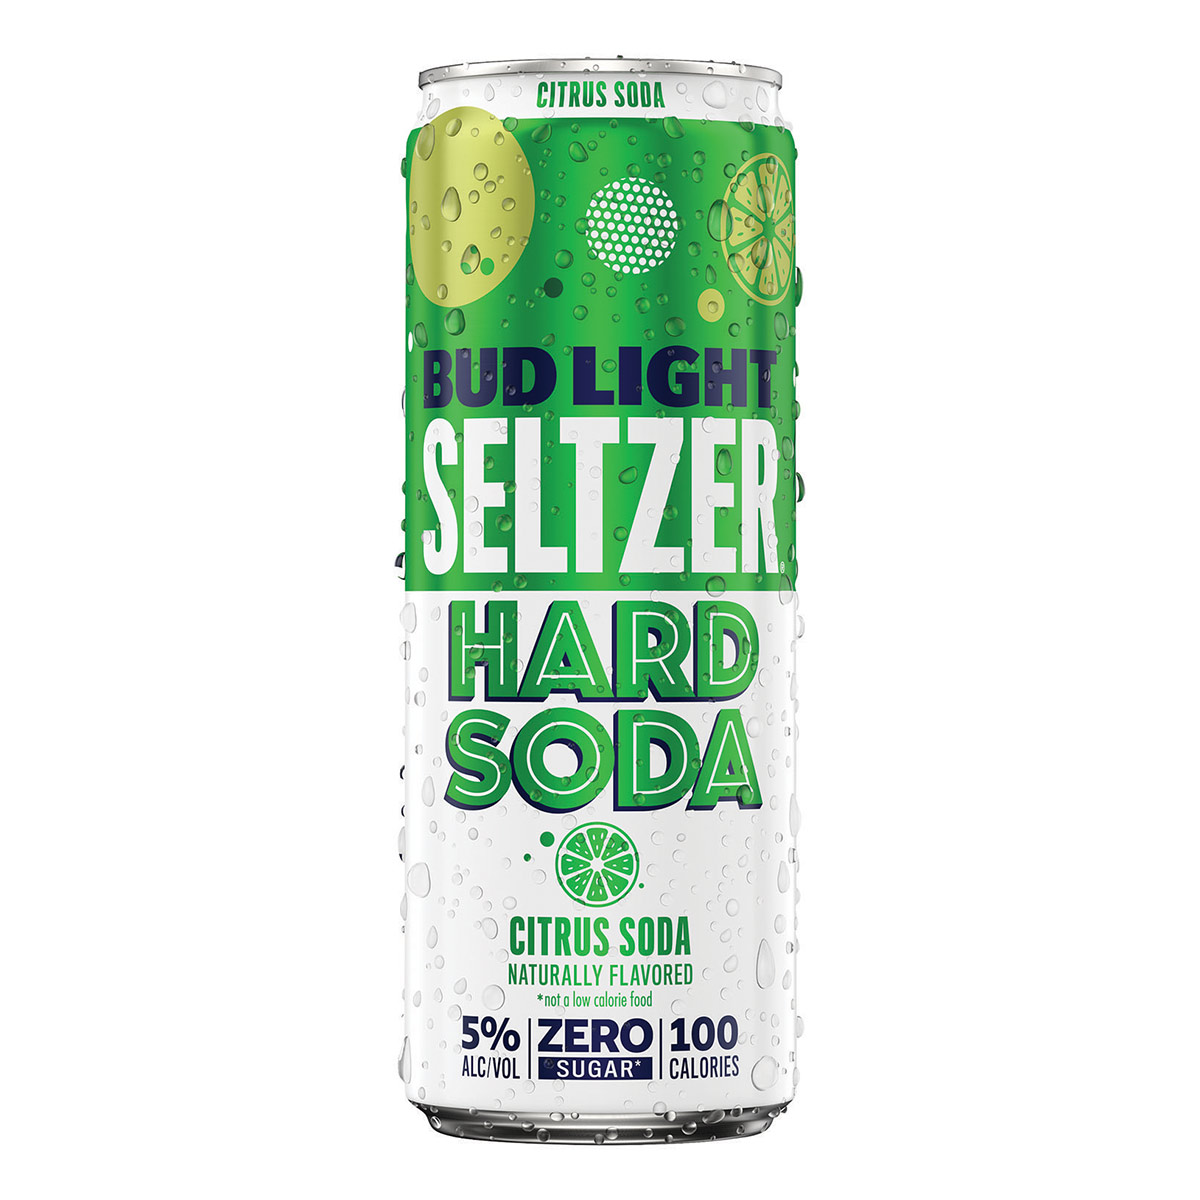 Hard Soda: Citrus Soda